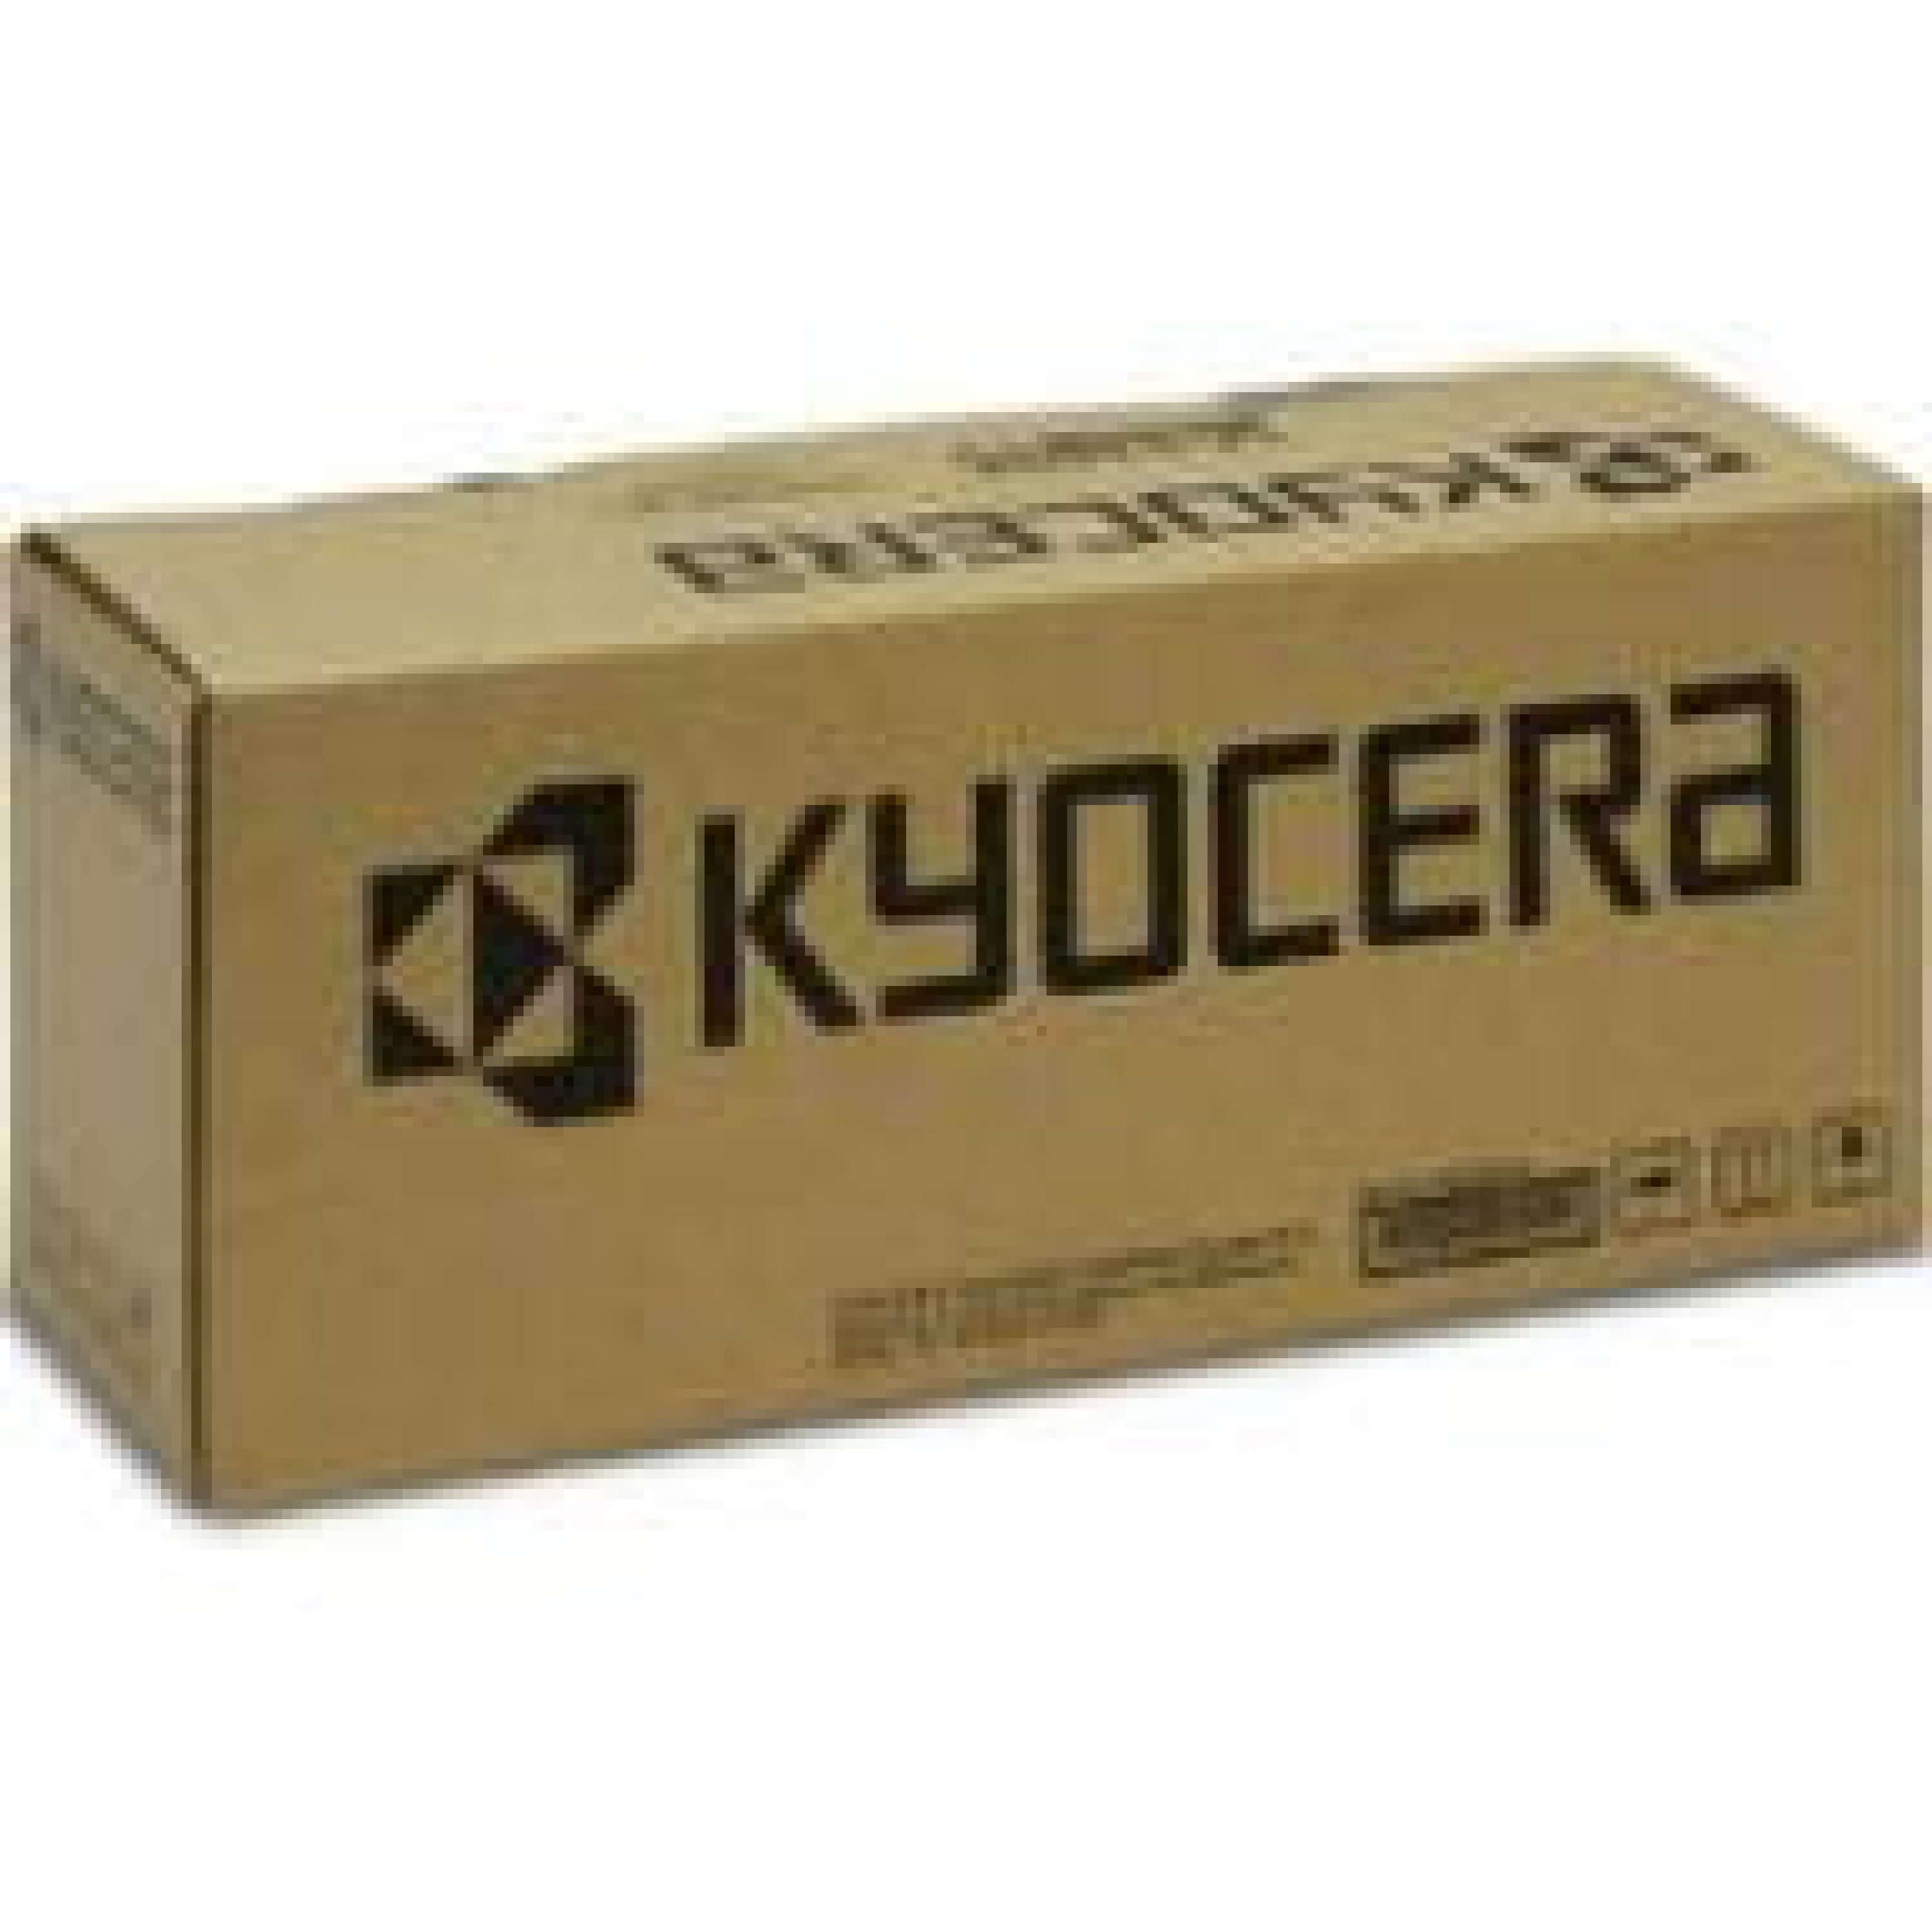 Original Toner Kyocera MA 2100 cfx (1T0C0ABNL0 / TK-5440M)